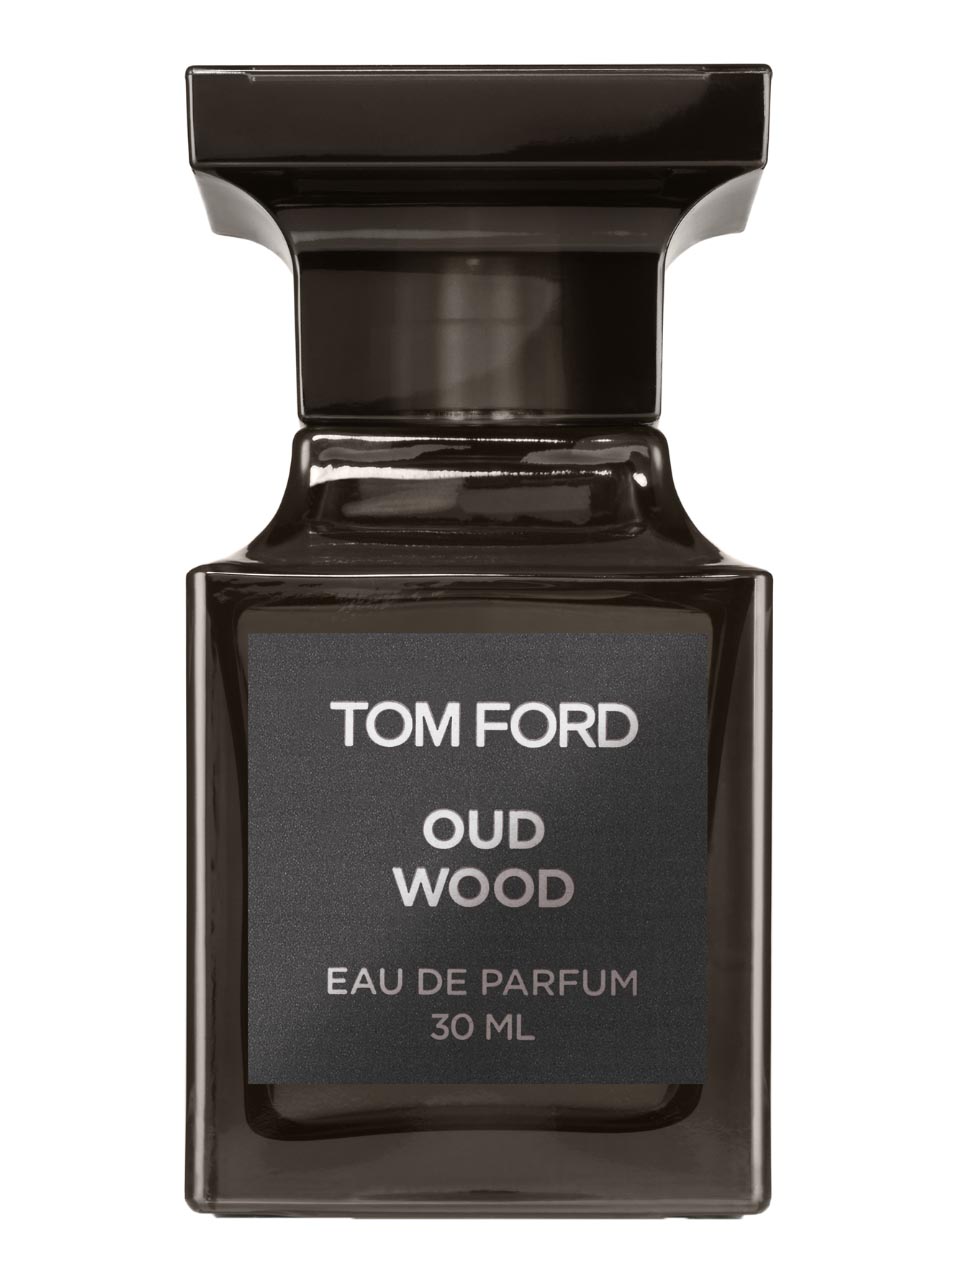 Tom Ford Oud Wood Eau de Parfum 30 ml null - onesize - 1